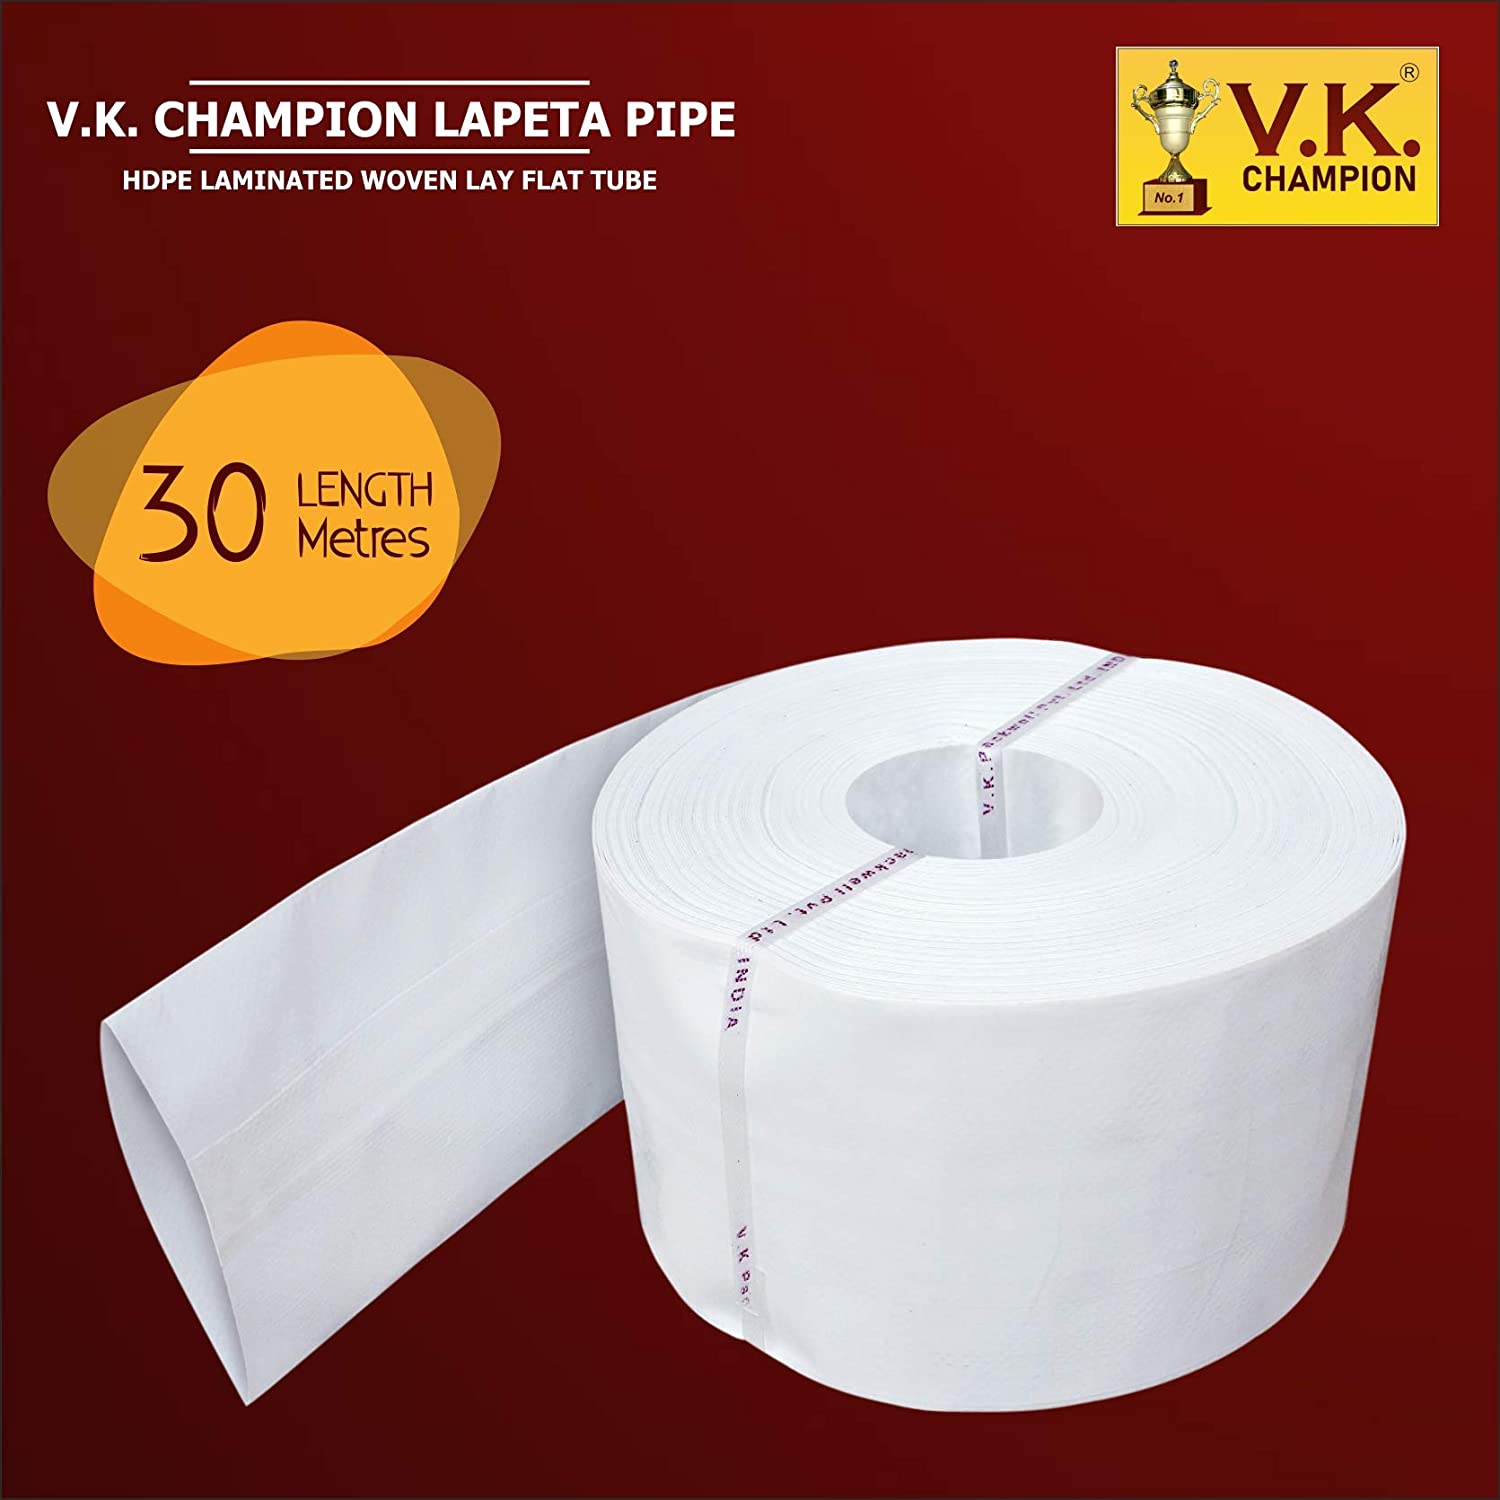 V.K. Champion HDPE Lapeta Pipe (30 meter)